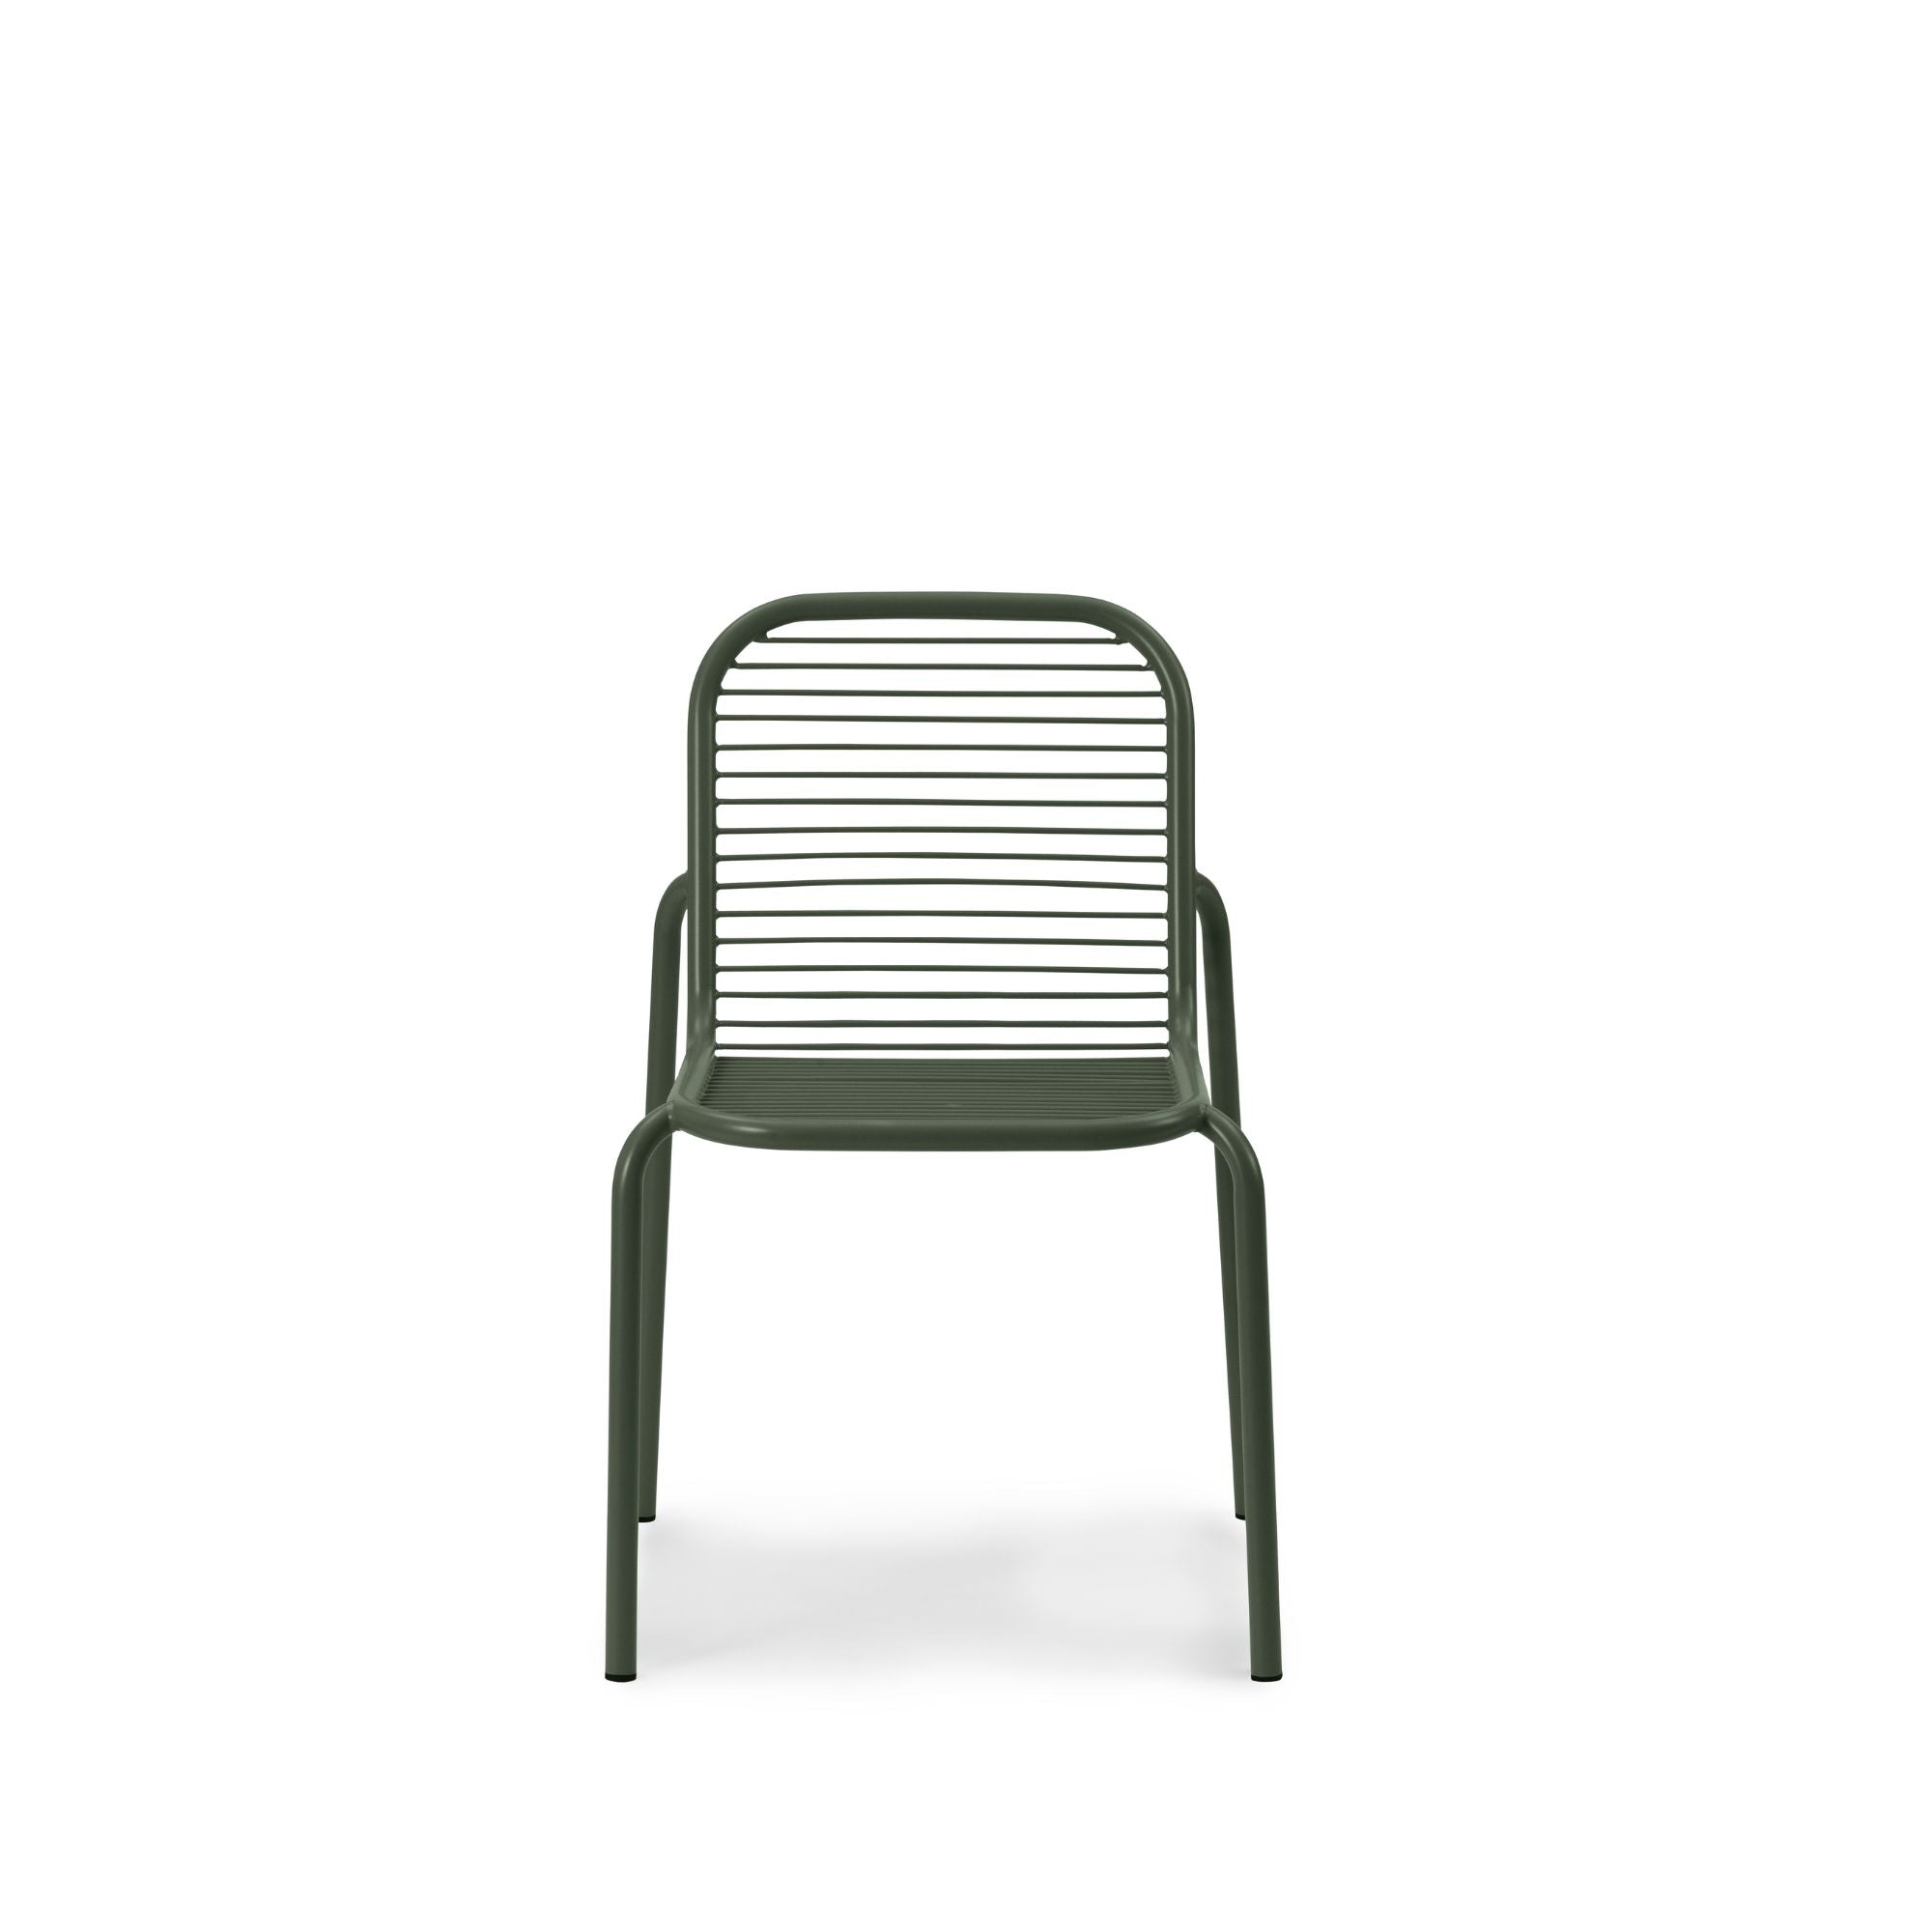 Vig Chair, scaun pentru exterior